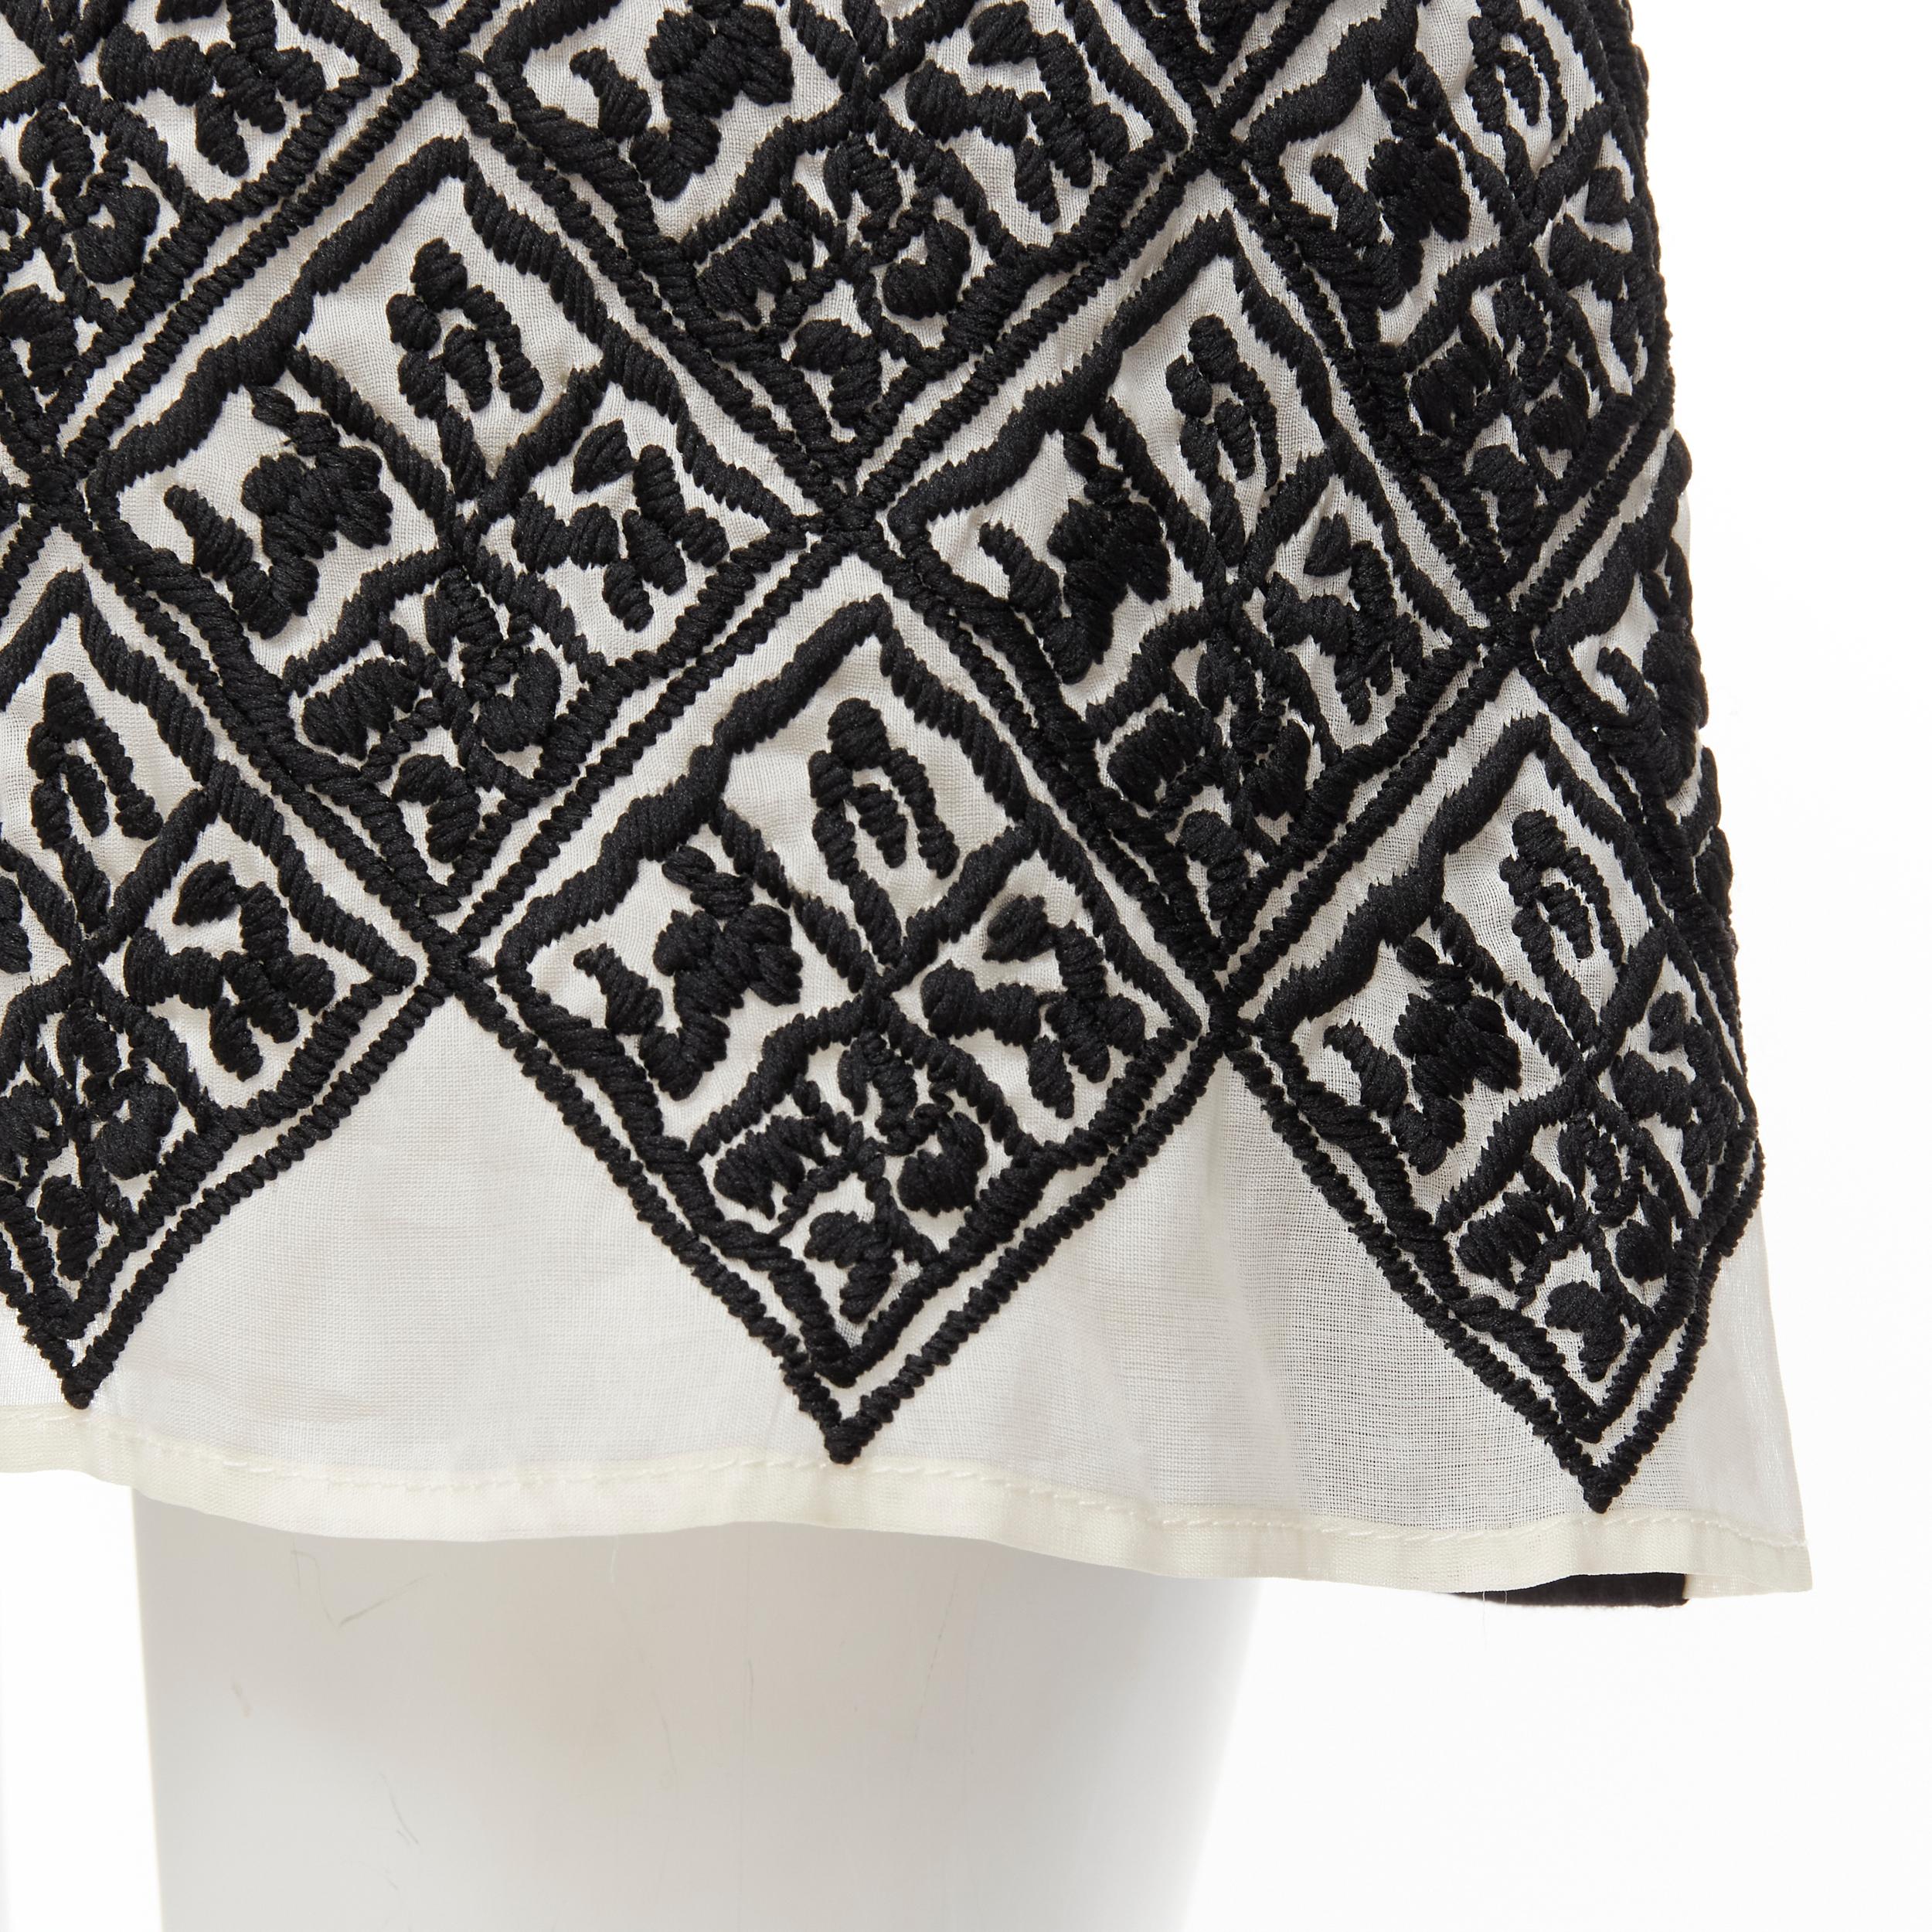 GIAMBATTISTA VALLI geometric jacquard front black cotton t-shirt dress XXS 
Reference: LNKO/A01851 
Brand: Giambattista Valli 
Designer: Giambattista Valli 
Material: Cotton 
Color: Black 
Pattern: Geometric 
Made in: Italy 

CONDITION: 
Condition: